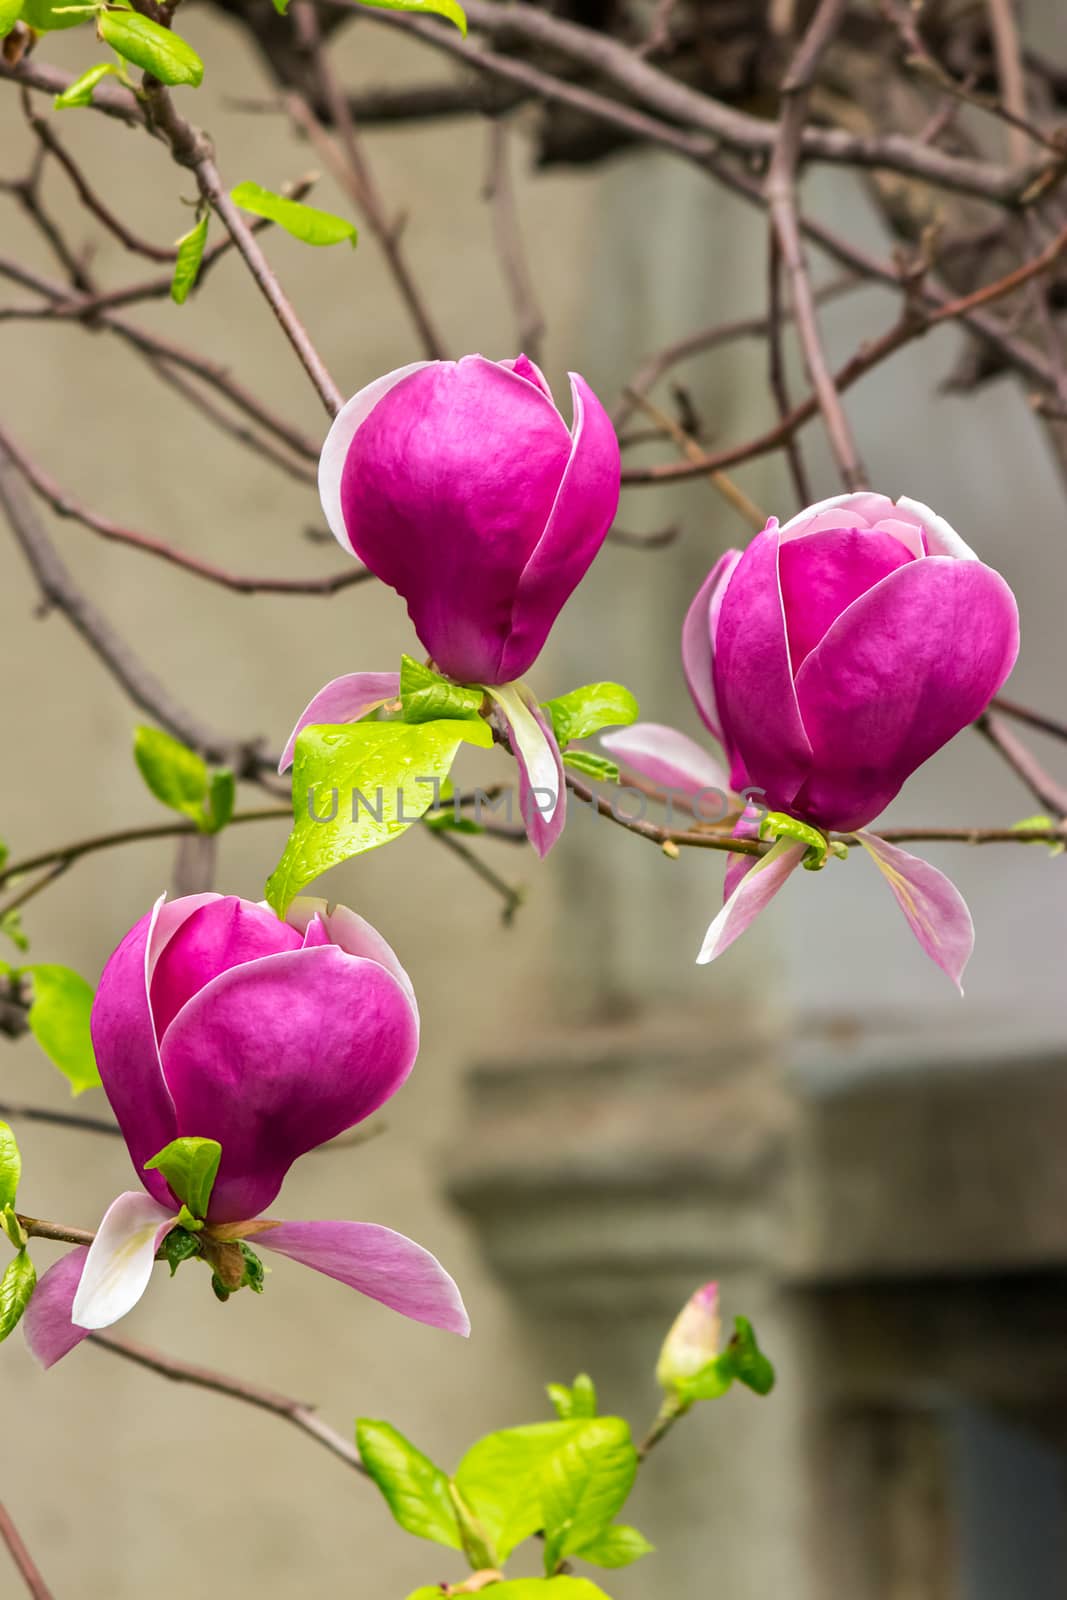 magnolia flowers on a blury background by Pellinni